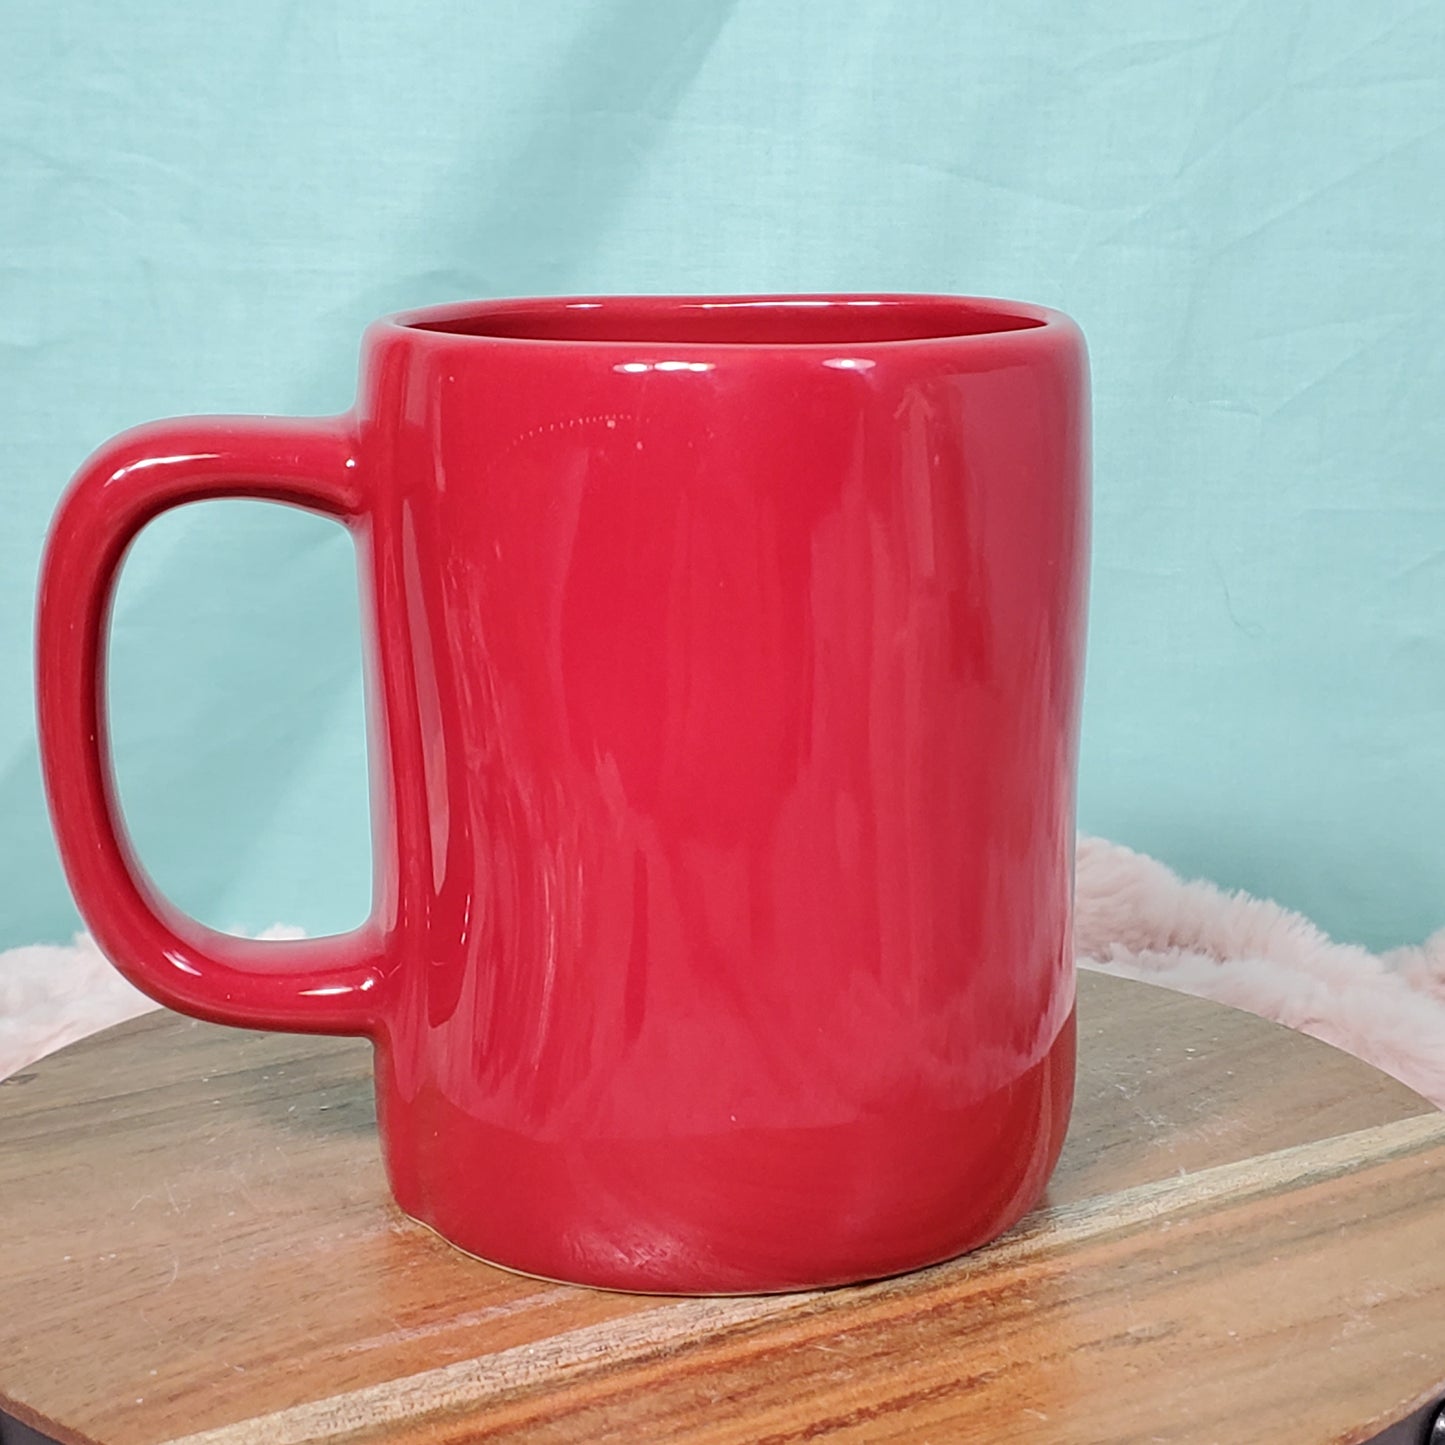 Rae Dunn 'Merry Christmas' Cursive Coffee Mug - Glossy Red